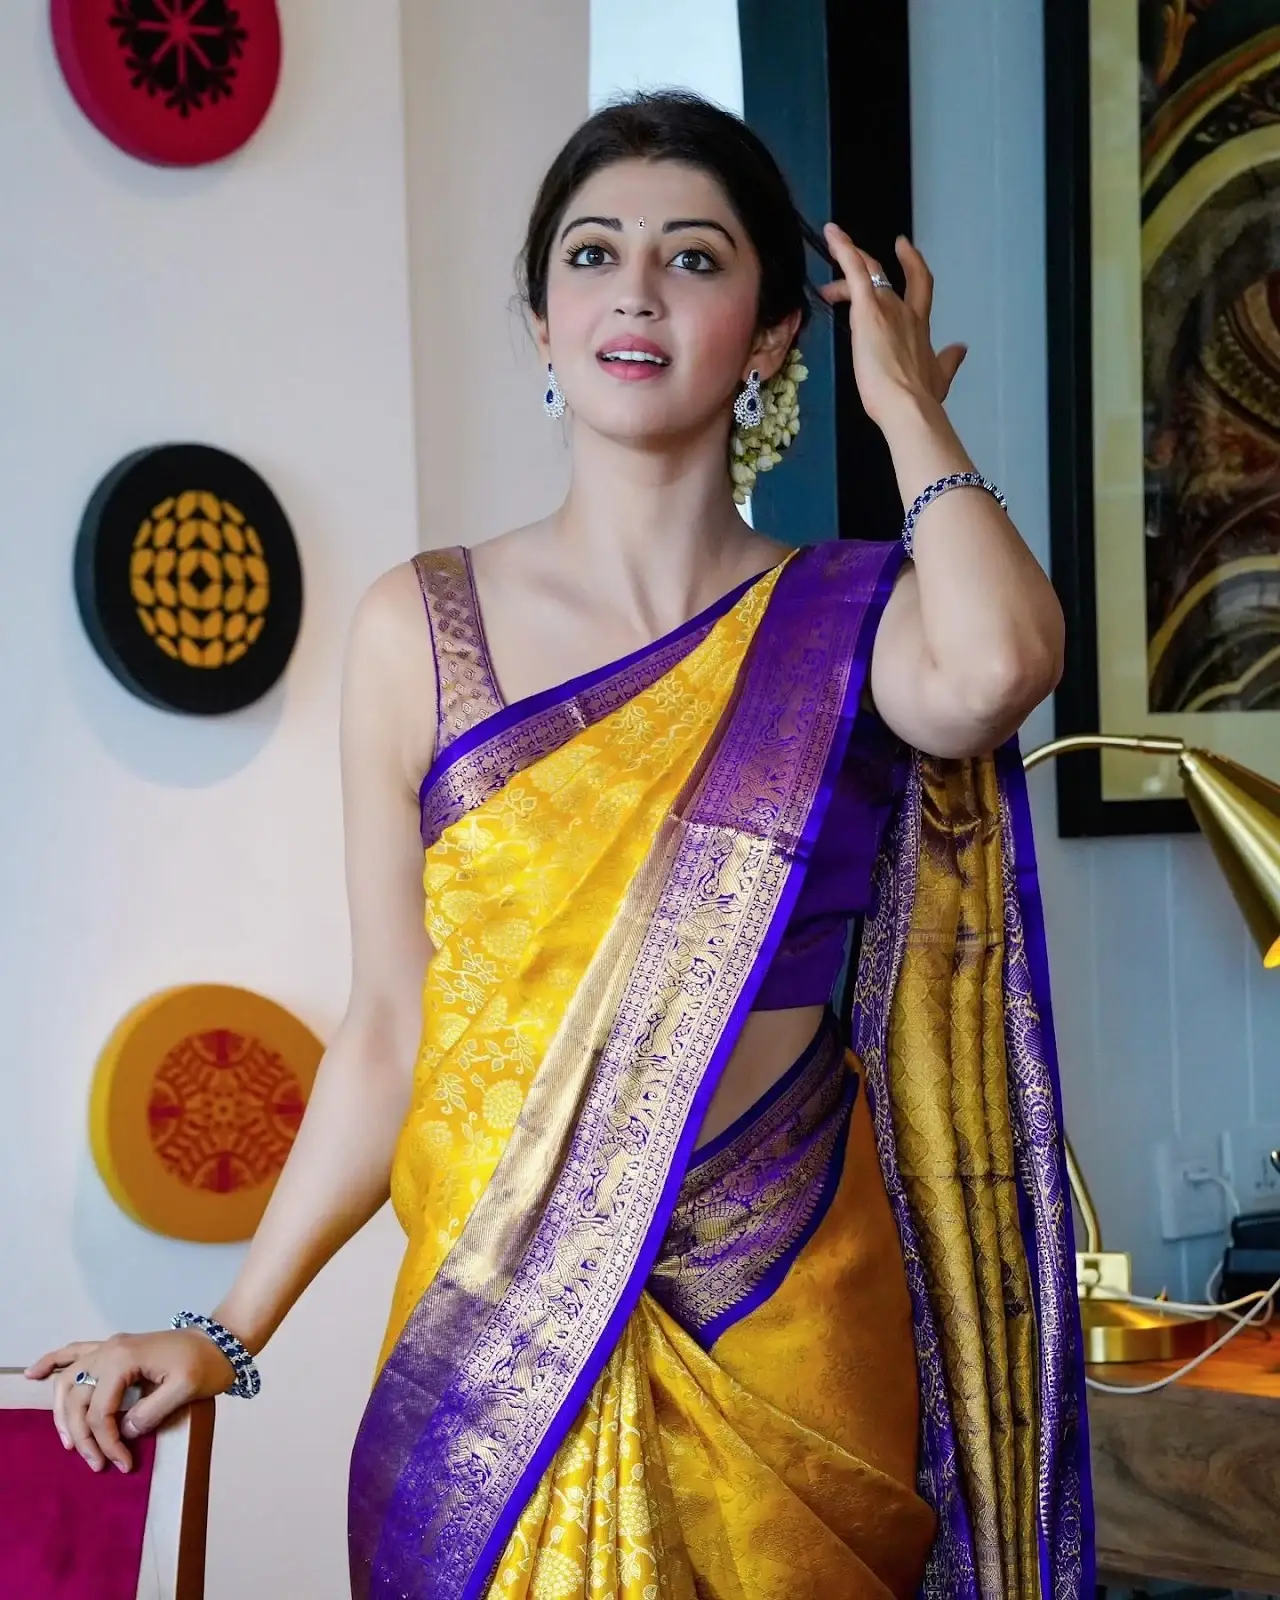 INDIAN ACTRESS PRANITHA SUBHASH IN TRADITIONAL YELLOW SAREE 2